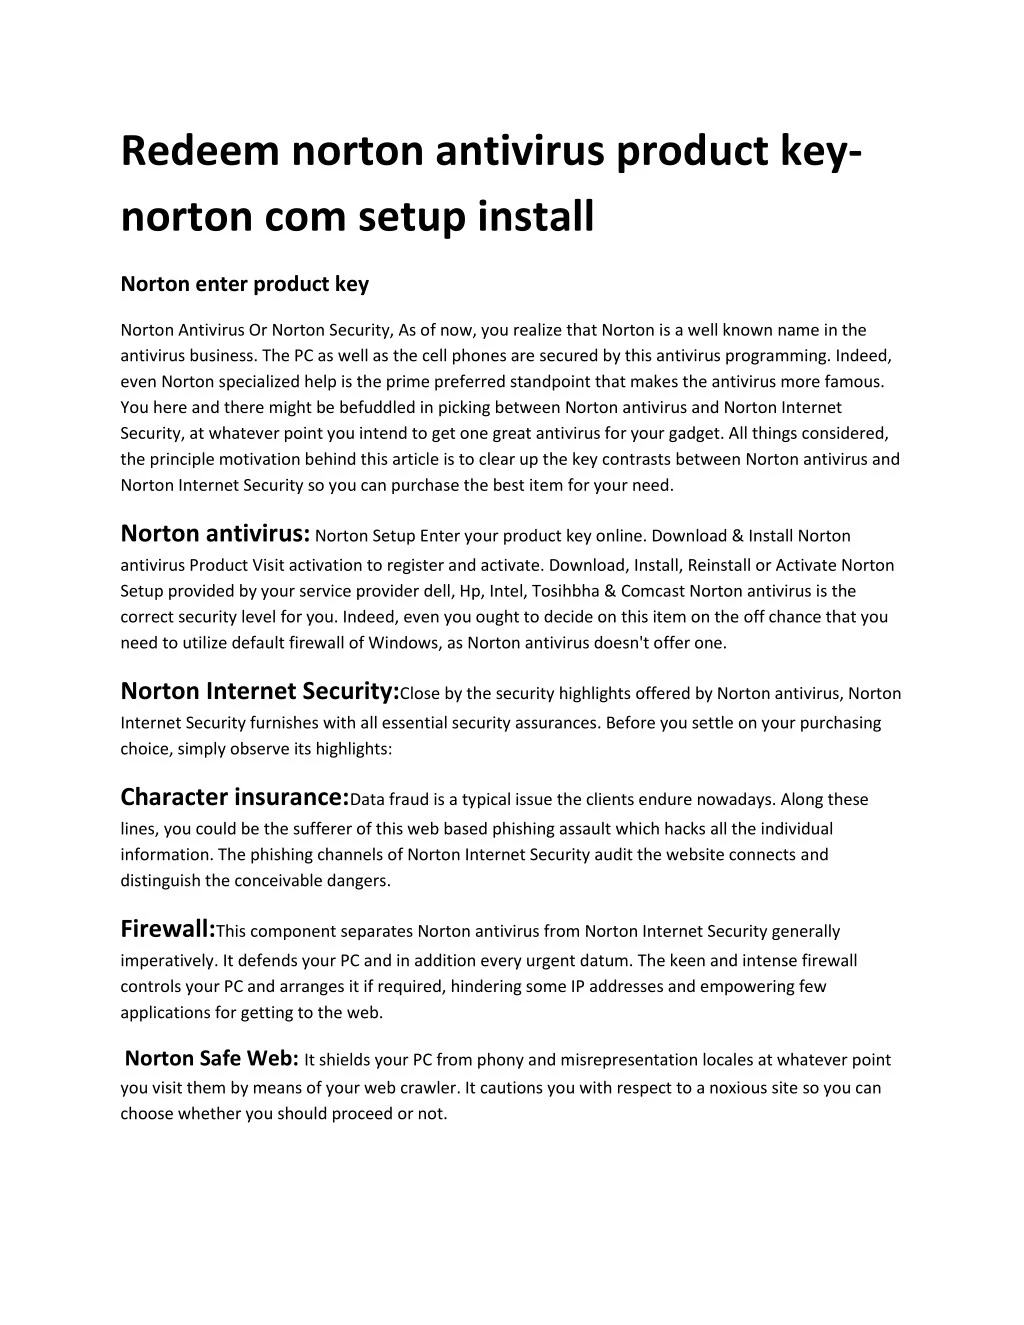 redeem norton antivirus product key norton